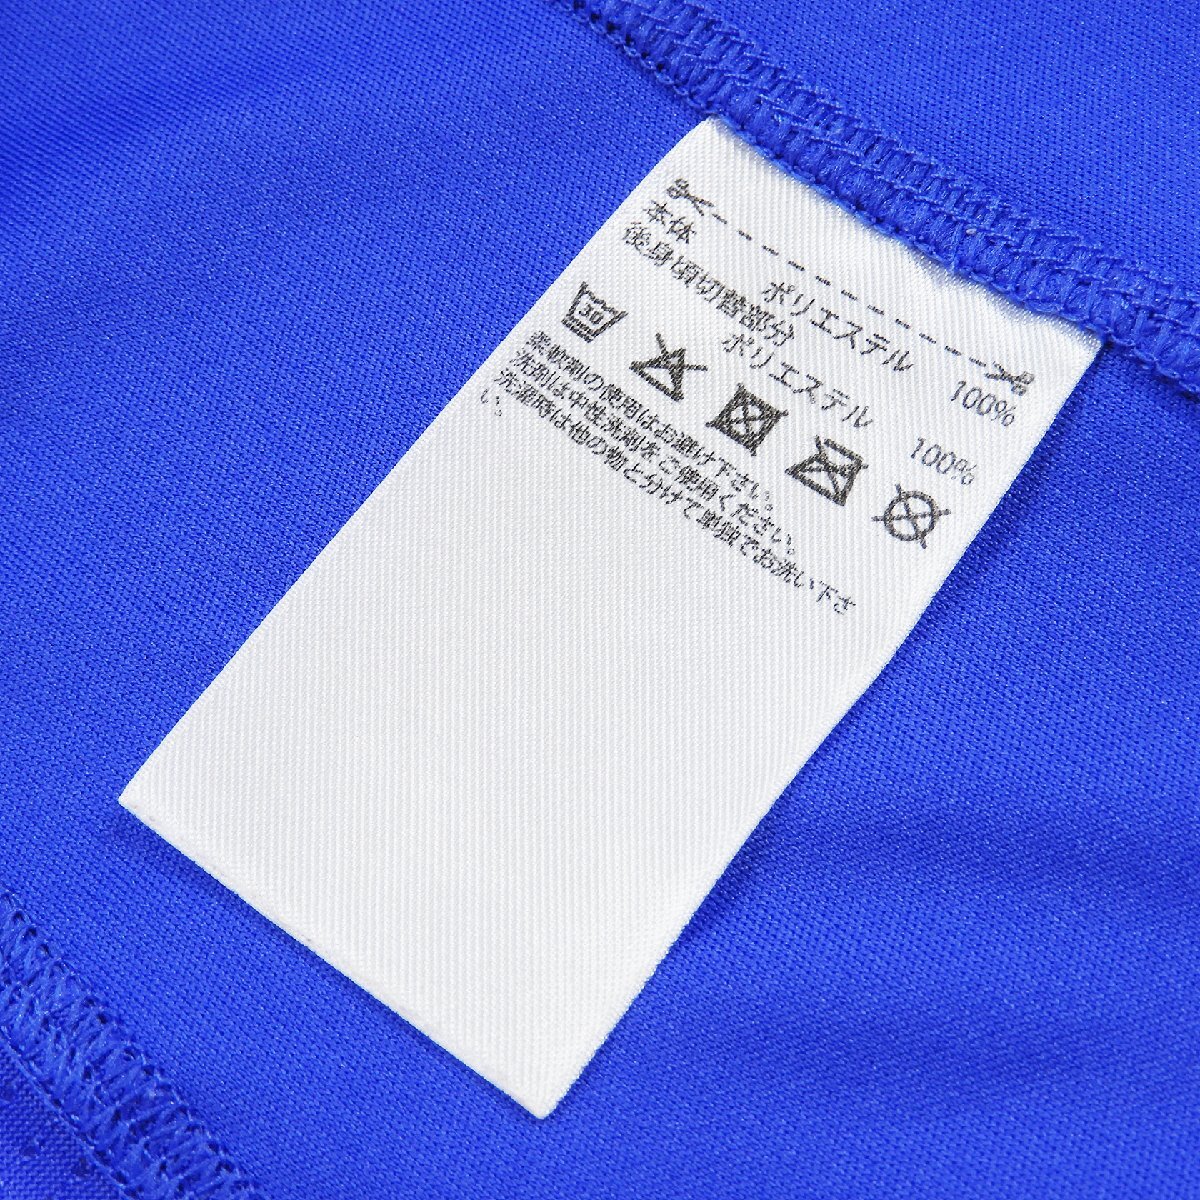 Reebok リーボック SPEEDWICK 長袖 Tシャツ size M #19302 送料360円 スポーツ ランニング_画像4